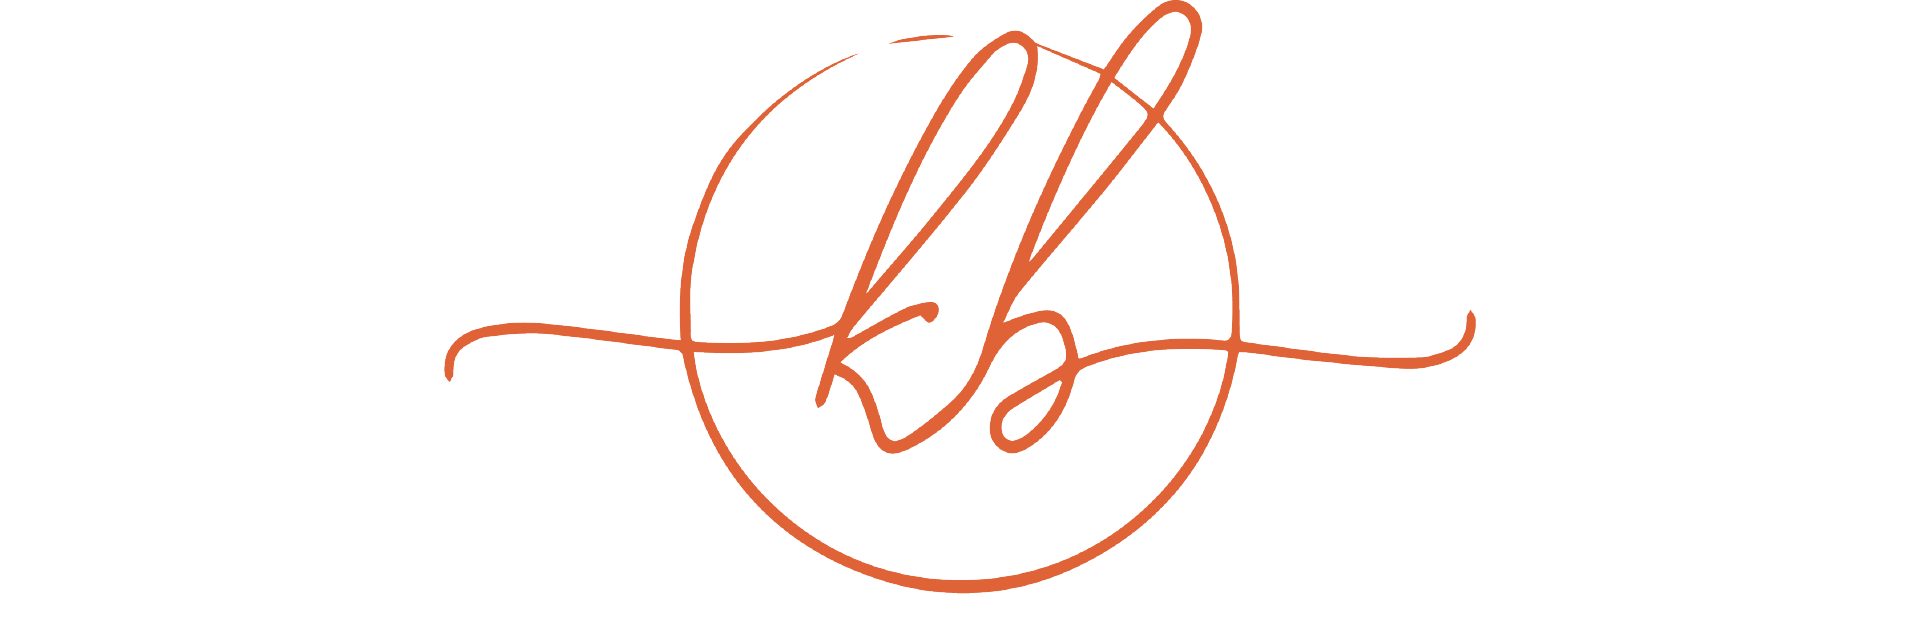 KB Letter Logo Design Vector Template. Alphabet Initial Letter KB Logo  Design With Glossy Reflection Business Illustration. 24710668 Vector Art at  Vecteezy